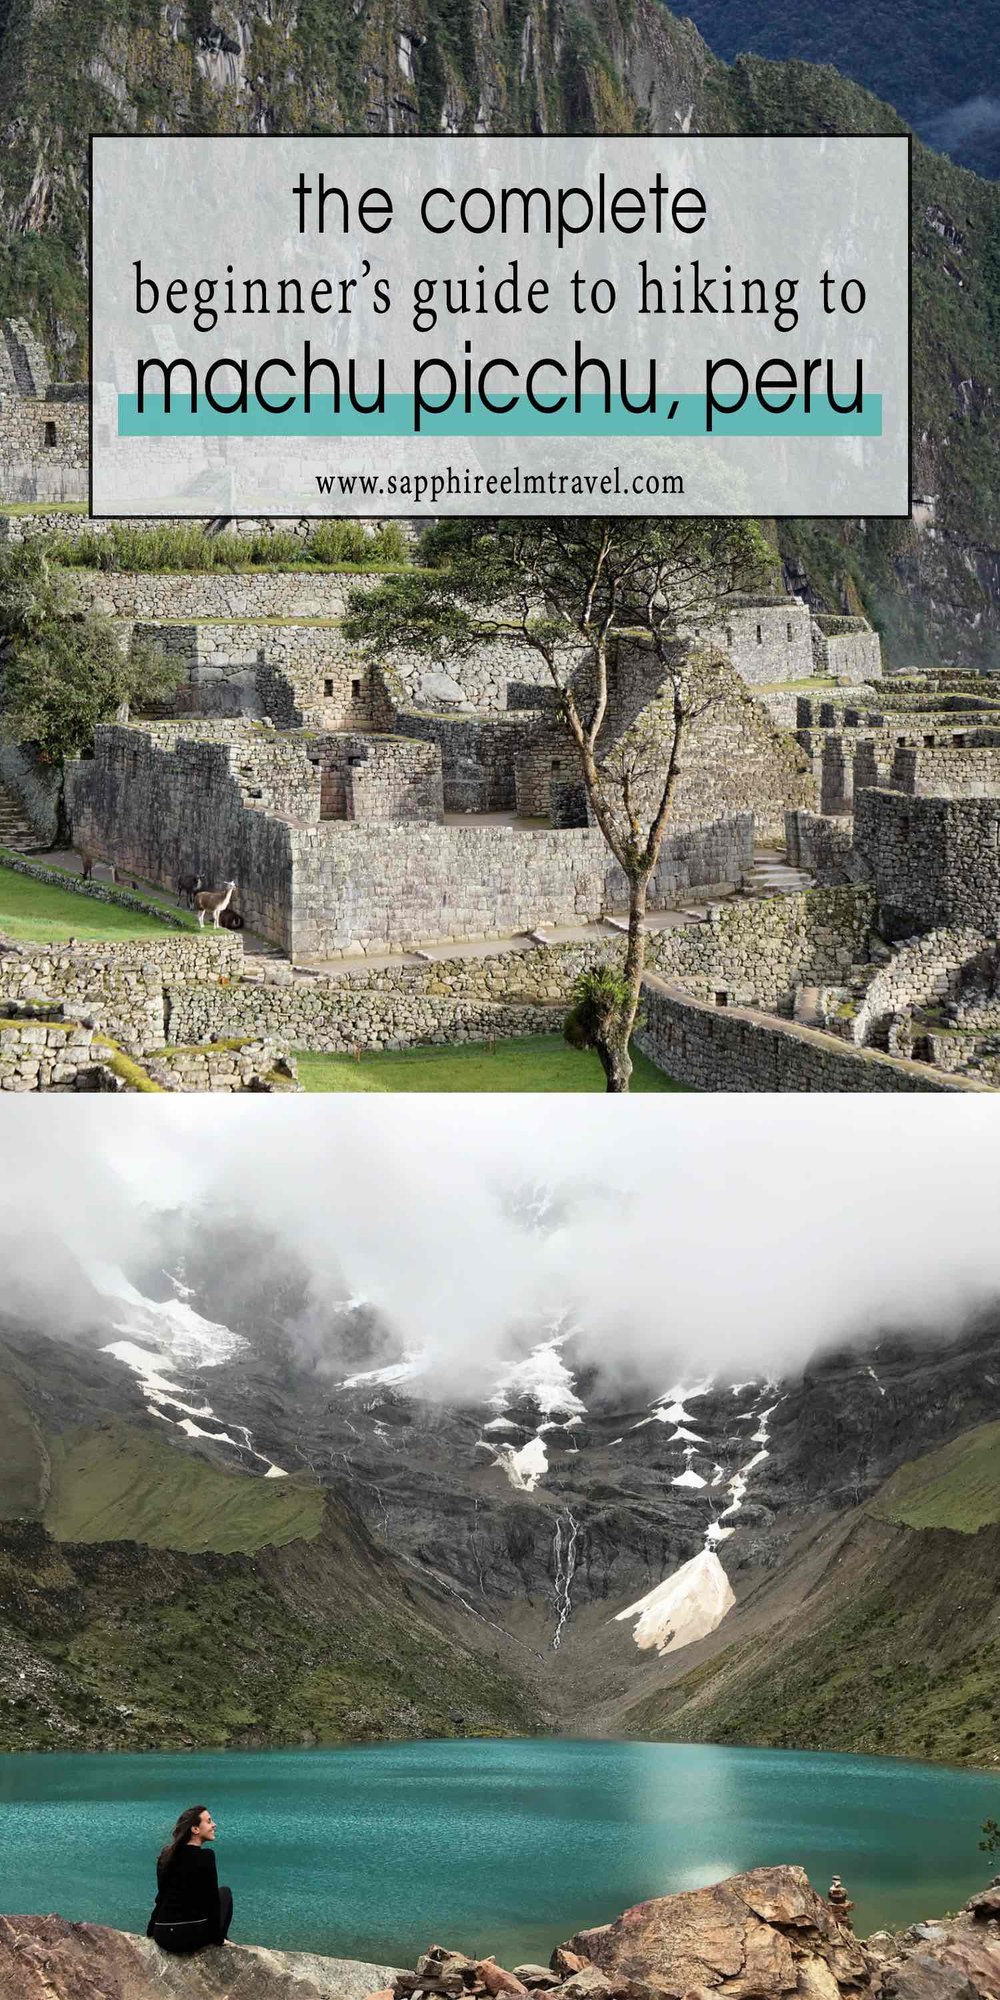 Guide to hiking to Machu Picchu Peru